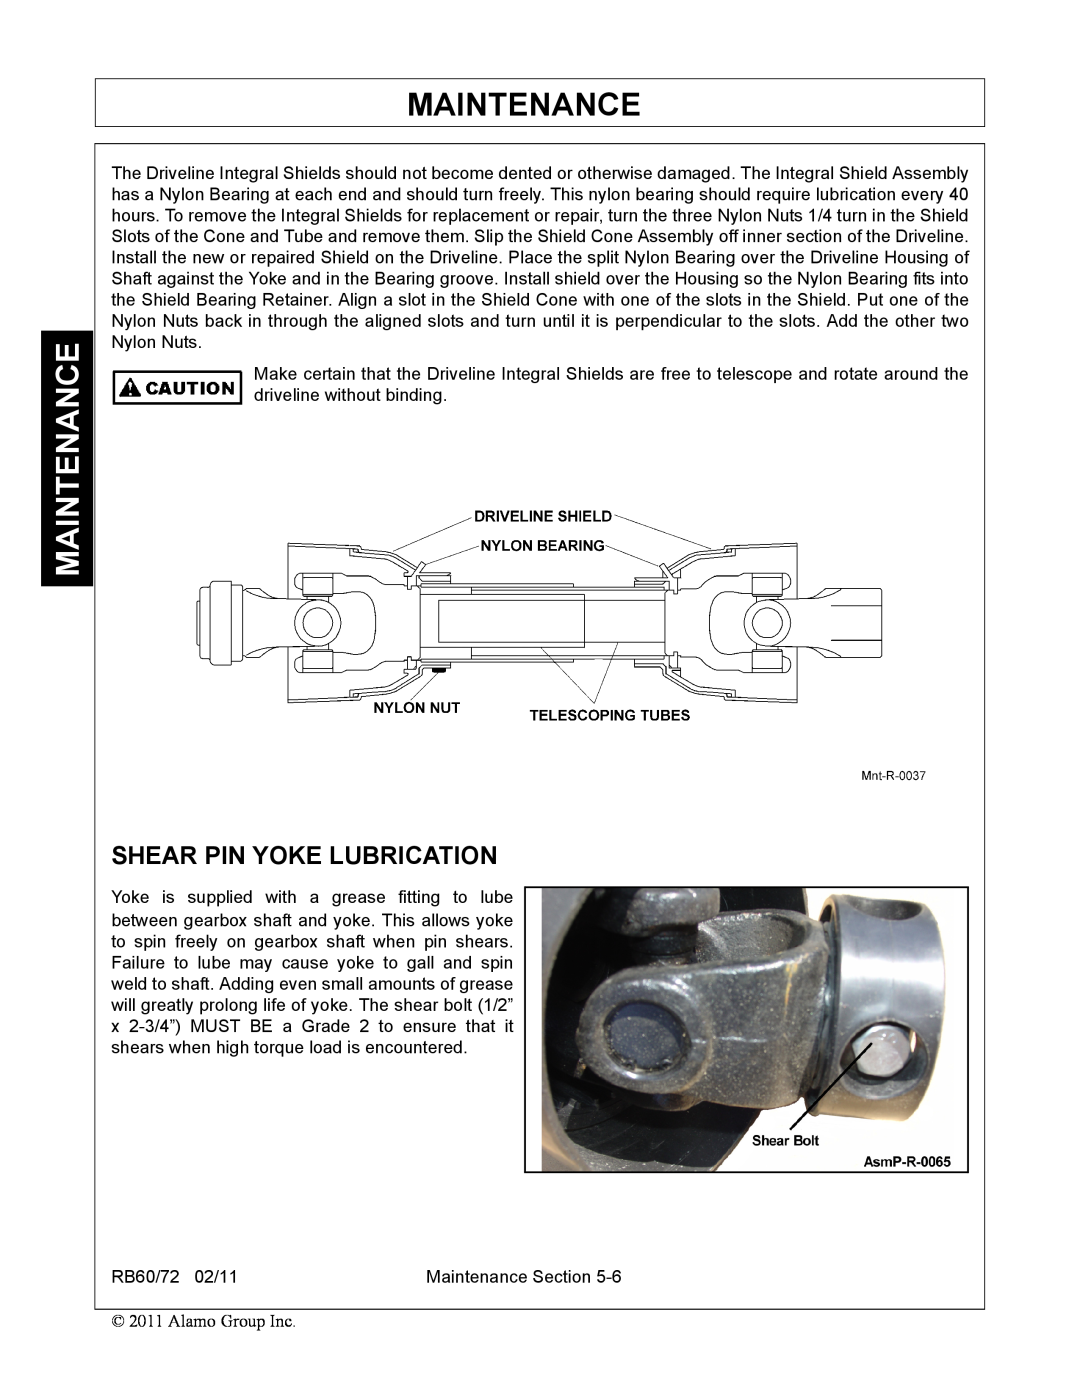 Blue Rhino RB60/72 manual Shear Pin Yoke Lubrication, Maintenance 